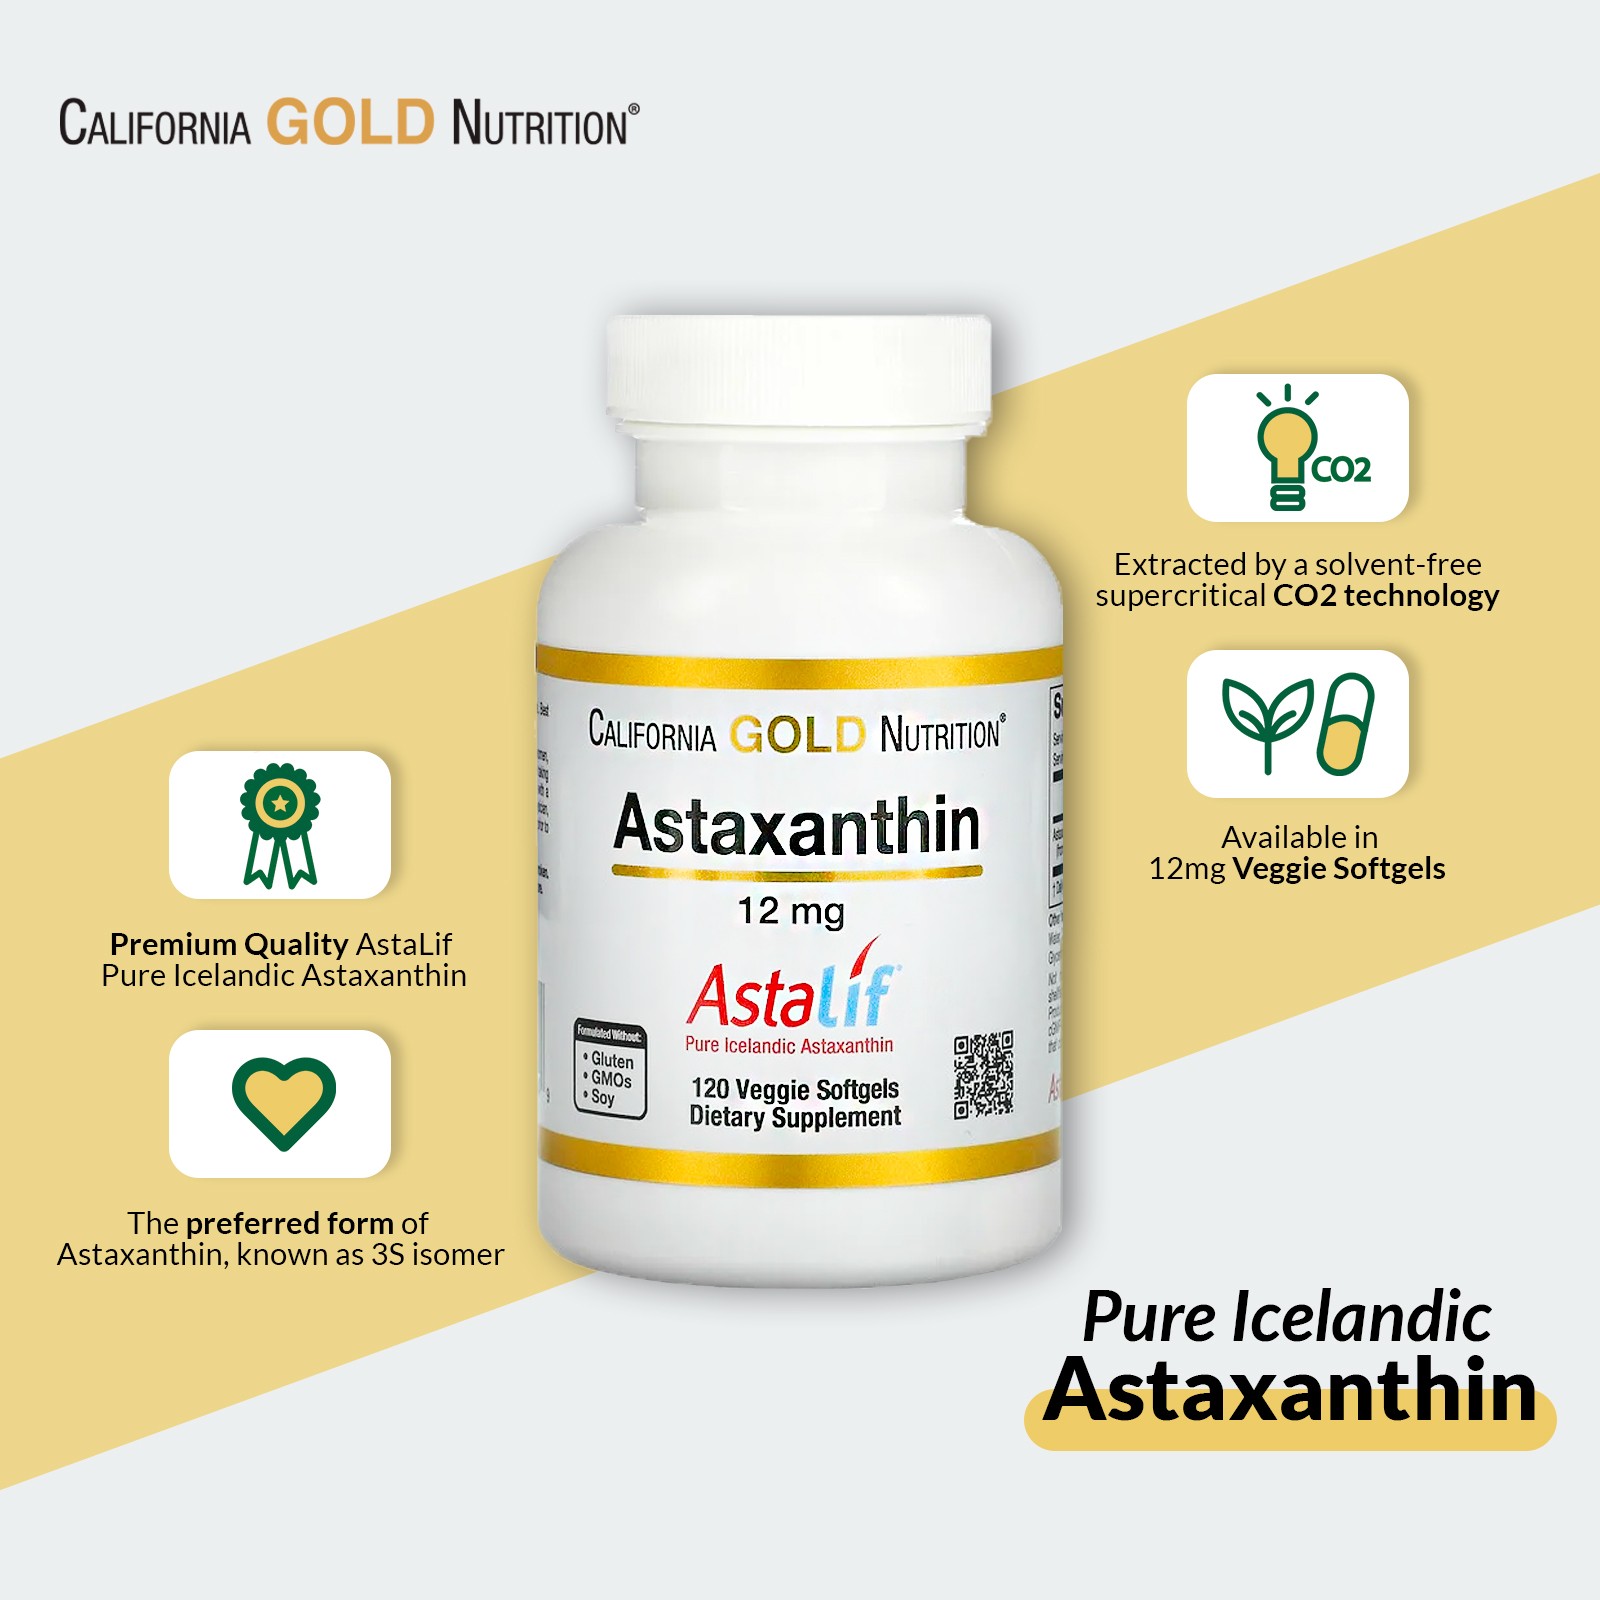 Astaxanthin By California Gold Nutrition Featuring Astalif® Pure Icelandic Astaxanthin 